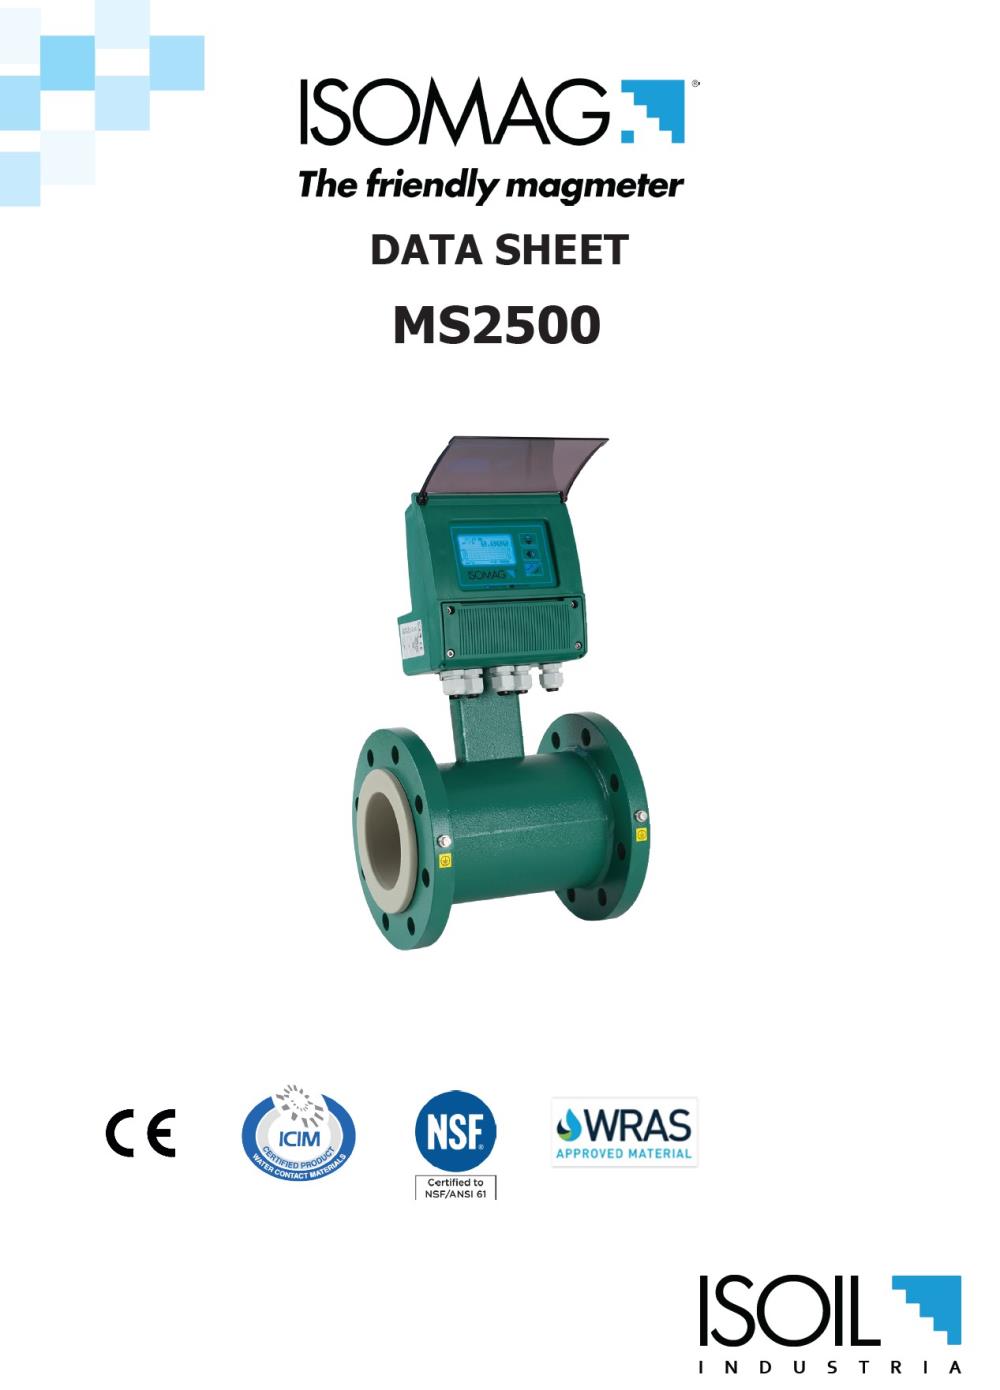 Magmeter (Magnetic Flow Meter), Model: MS2500, Brand: ISOIL Industria (Italy),#ขาย #Magmeter #MagneticFlowMeter #flowmeter #วัดของเหลวที่มีค่าการนำไฟฟ้าสูง #น้ำเปล่า #น้ำคลอง #น้ำดิบ #น้ำเสีย #ms2500 #isomag #isoil #isoilindustria #อุตสาหกรรม #eec #power #ตัวแทนจำหน่าย #dealer #distributor #energy #construction #รับเหมา #ก่อสร้าง #นิคมอุตสาหกรรม #สินค้าอุตสาหกรรม #workicon #workicontech,,Instruments and Controls/Flow Meters